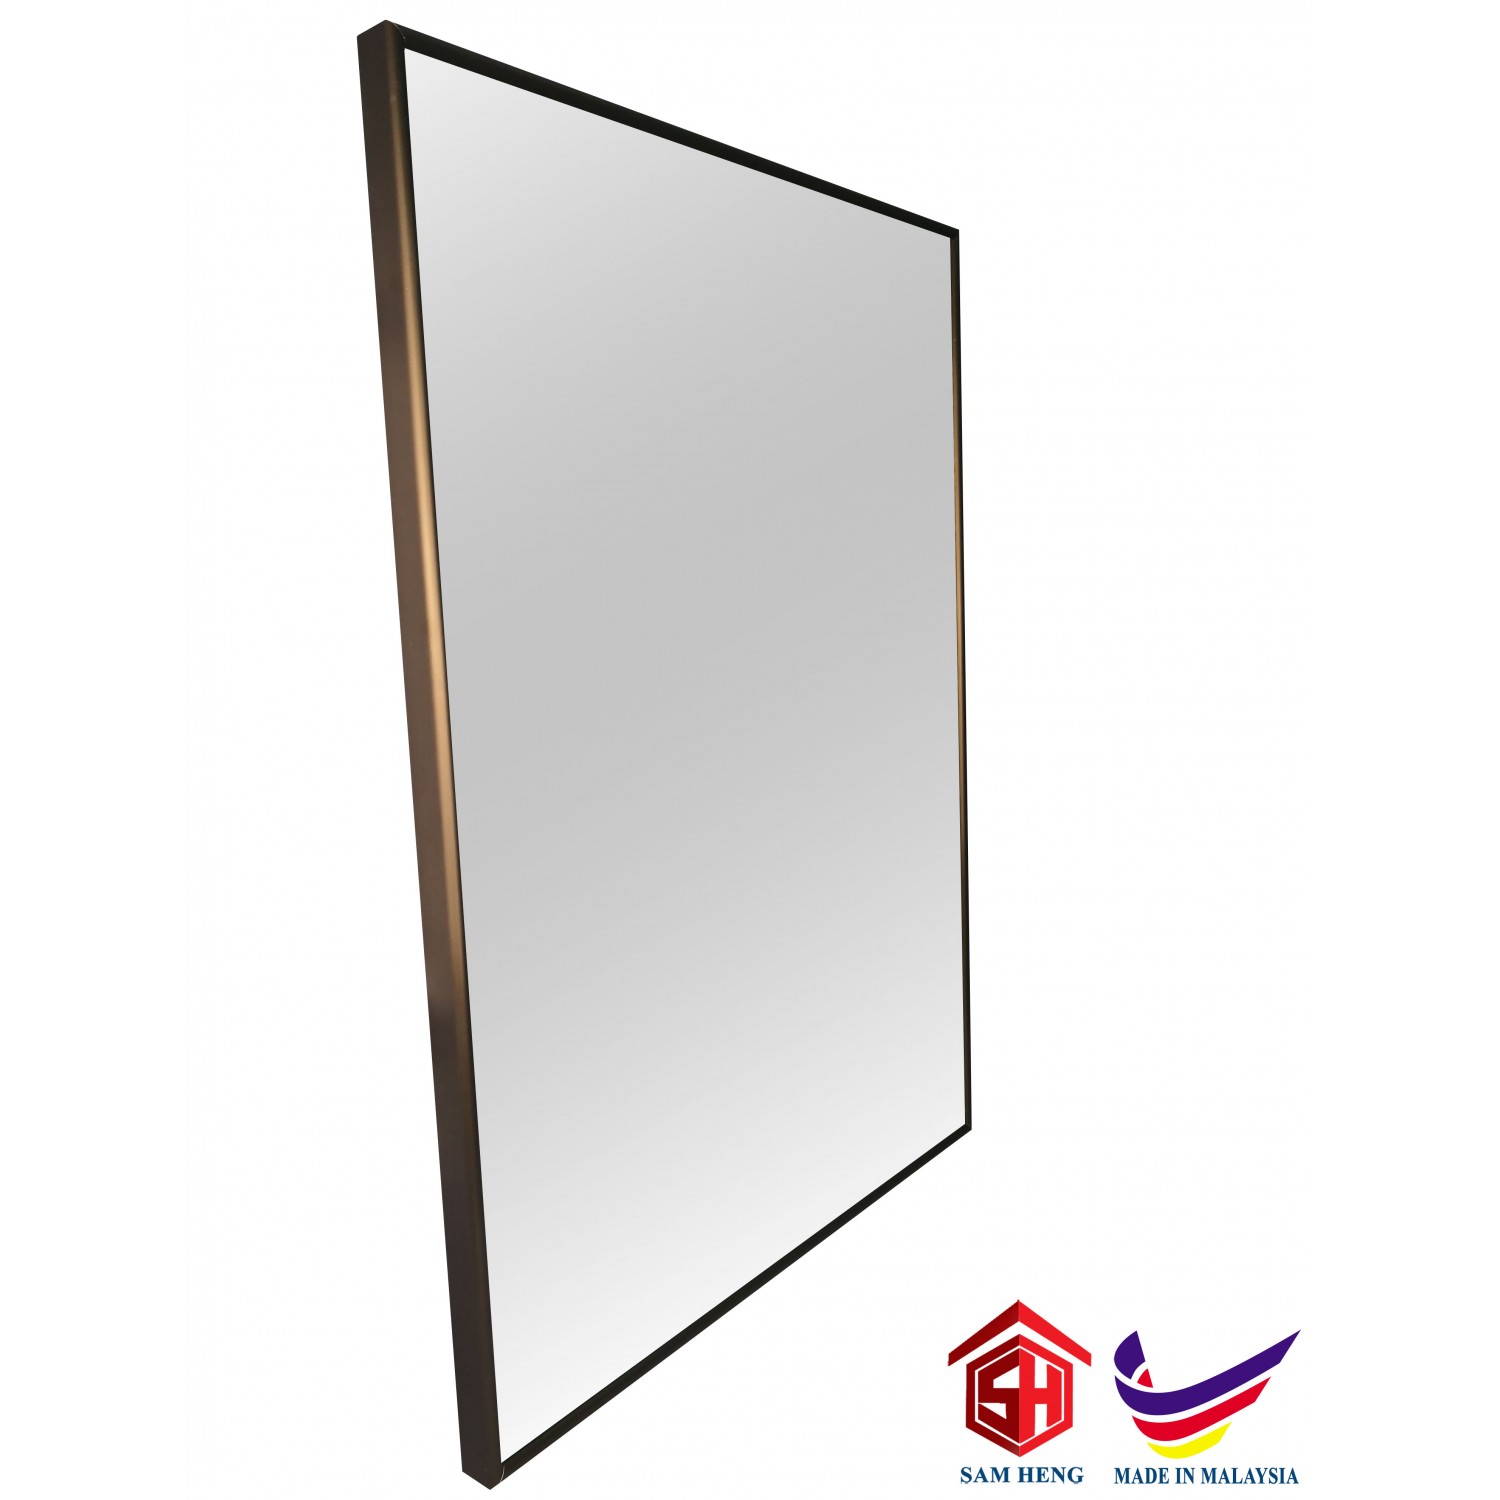 SMRM(S) Bathroom Aluminium Mirror Frame,Mocha Brown 595mm(H)x445mm(W)x21mm(D)/Bilik Mandi Aluminium Cermin Bingkai